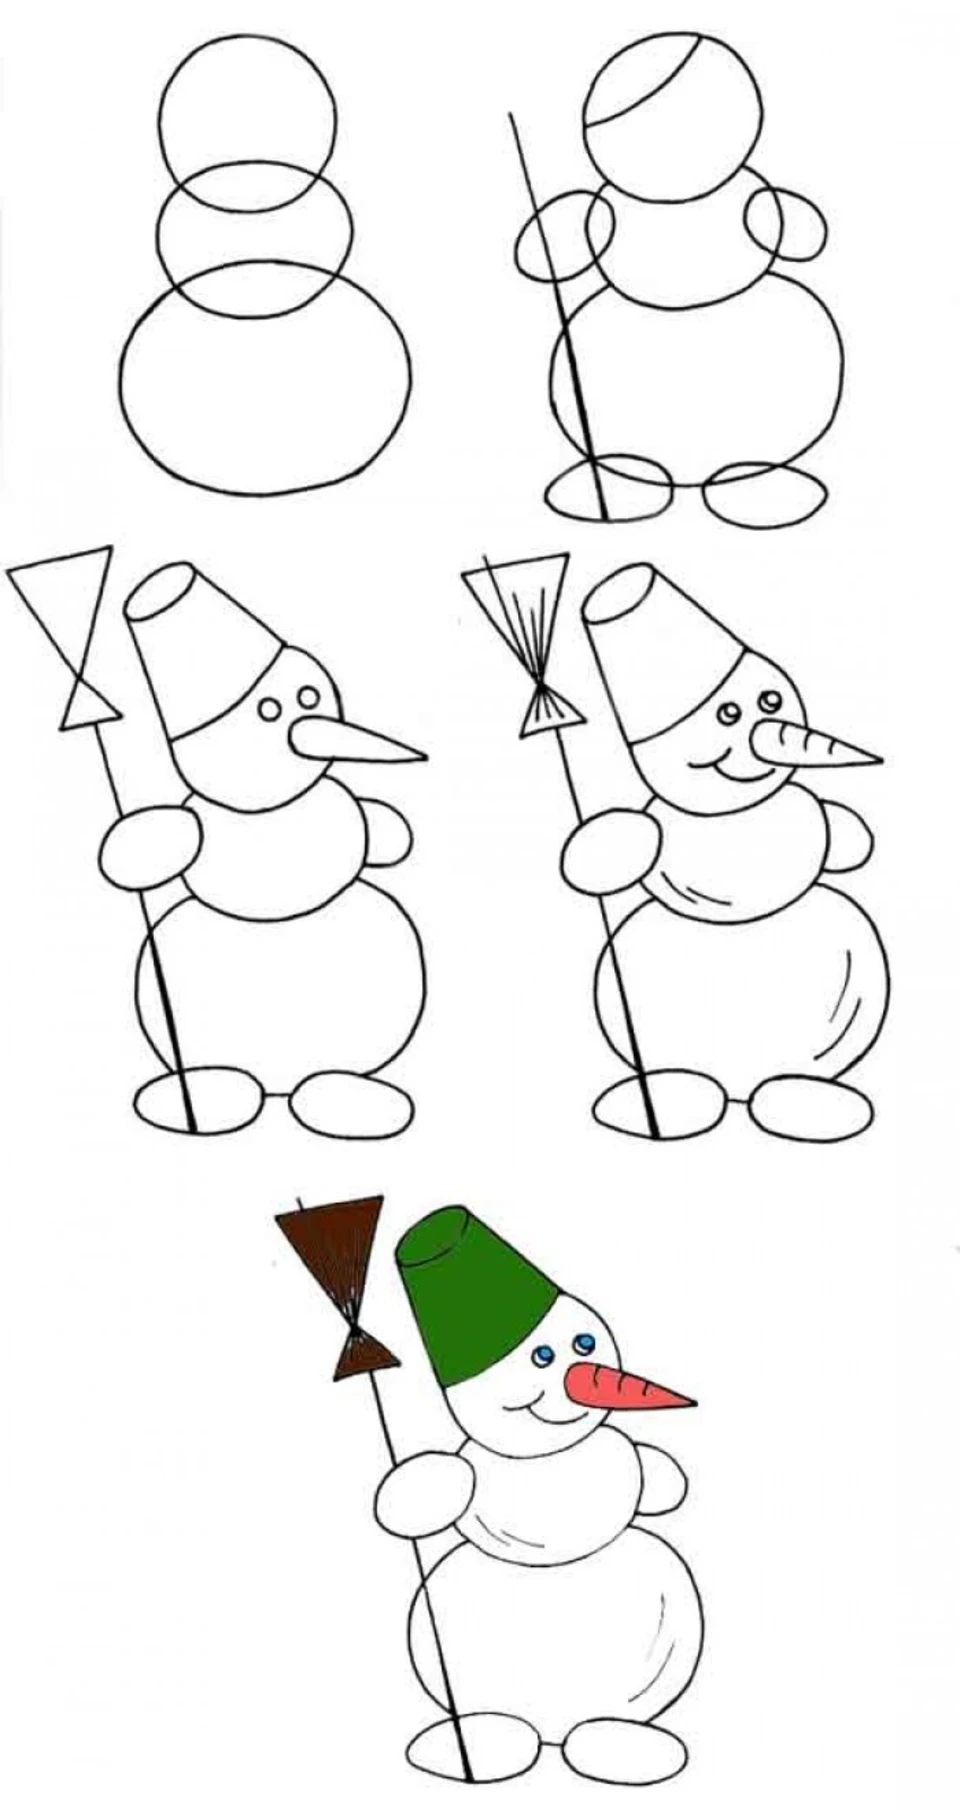 Рисование снеговика